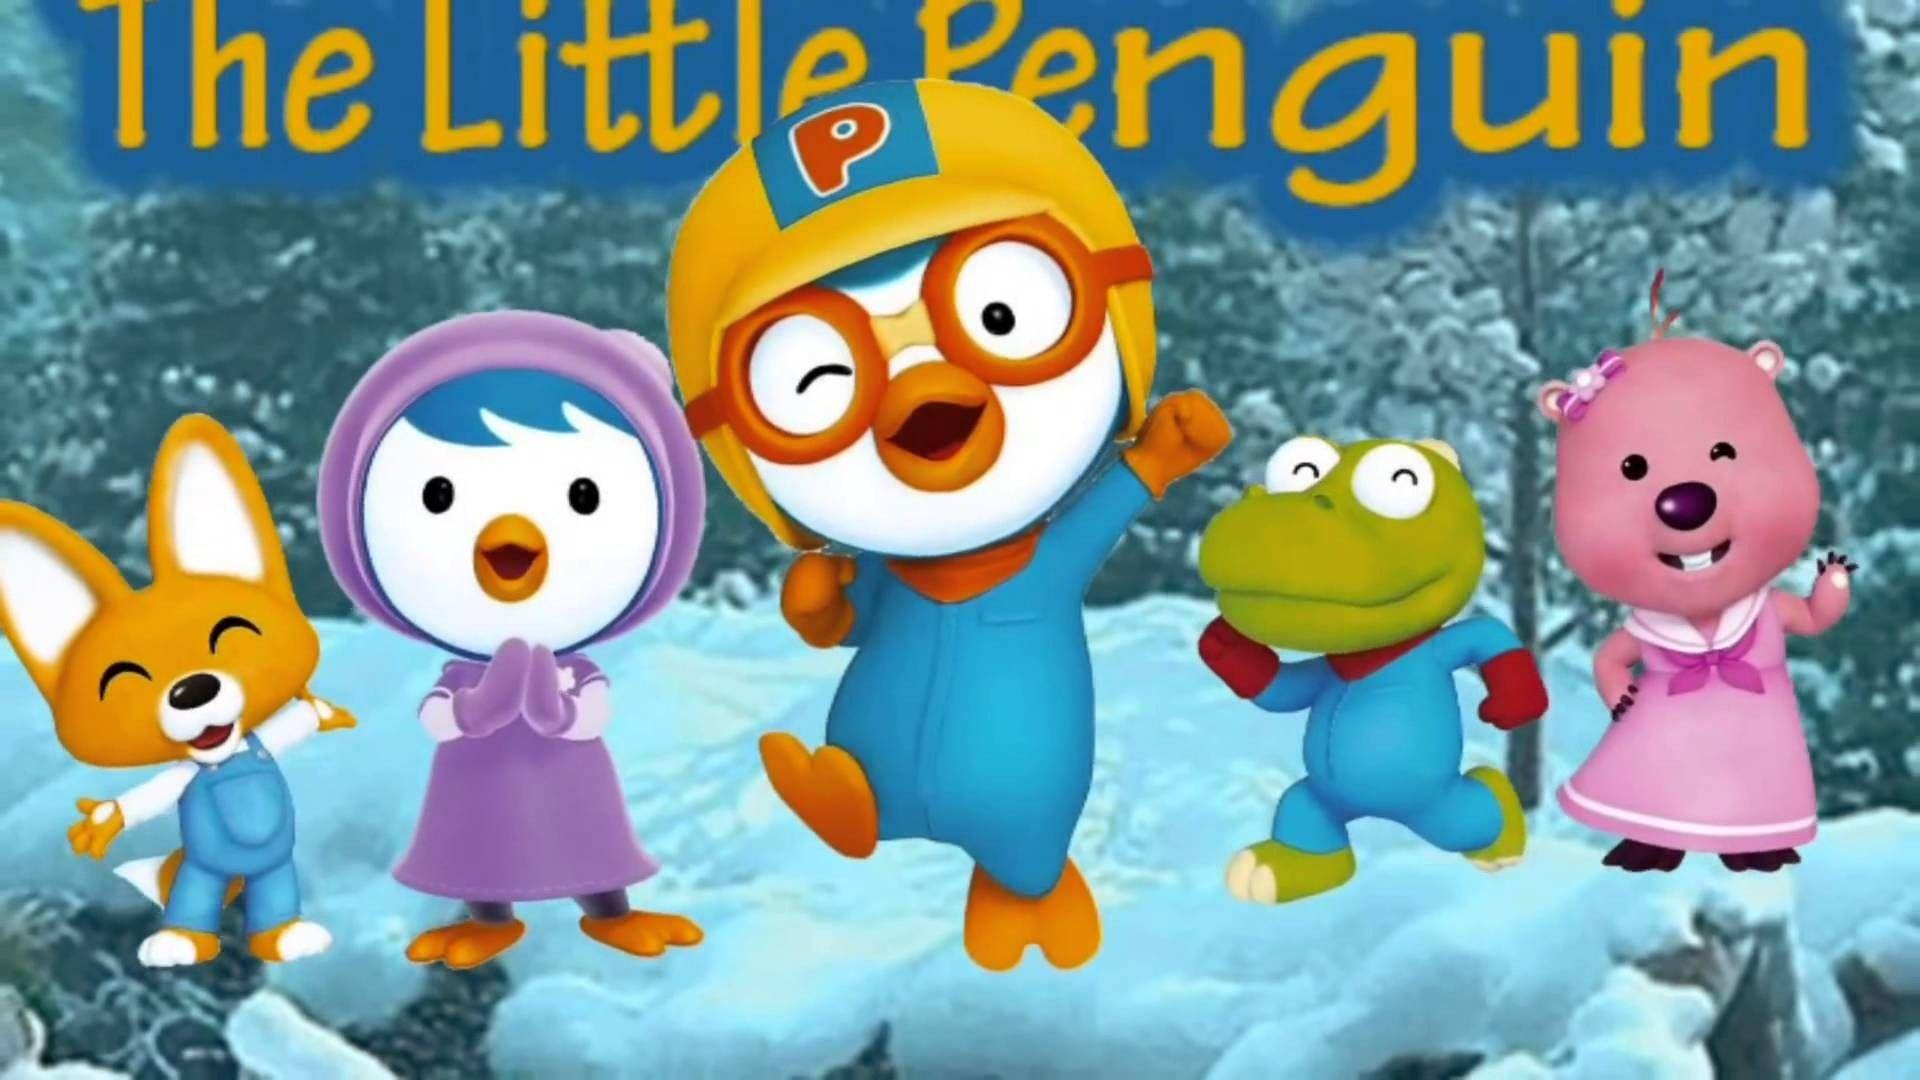 Pororo le petit penguin - Anime (2003) - SensCritique